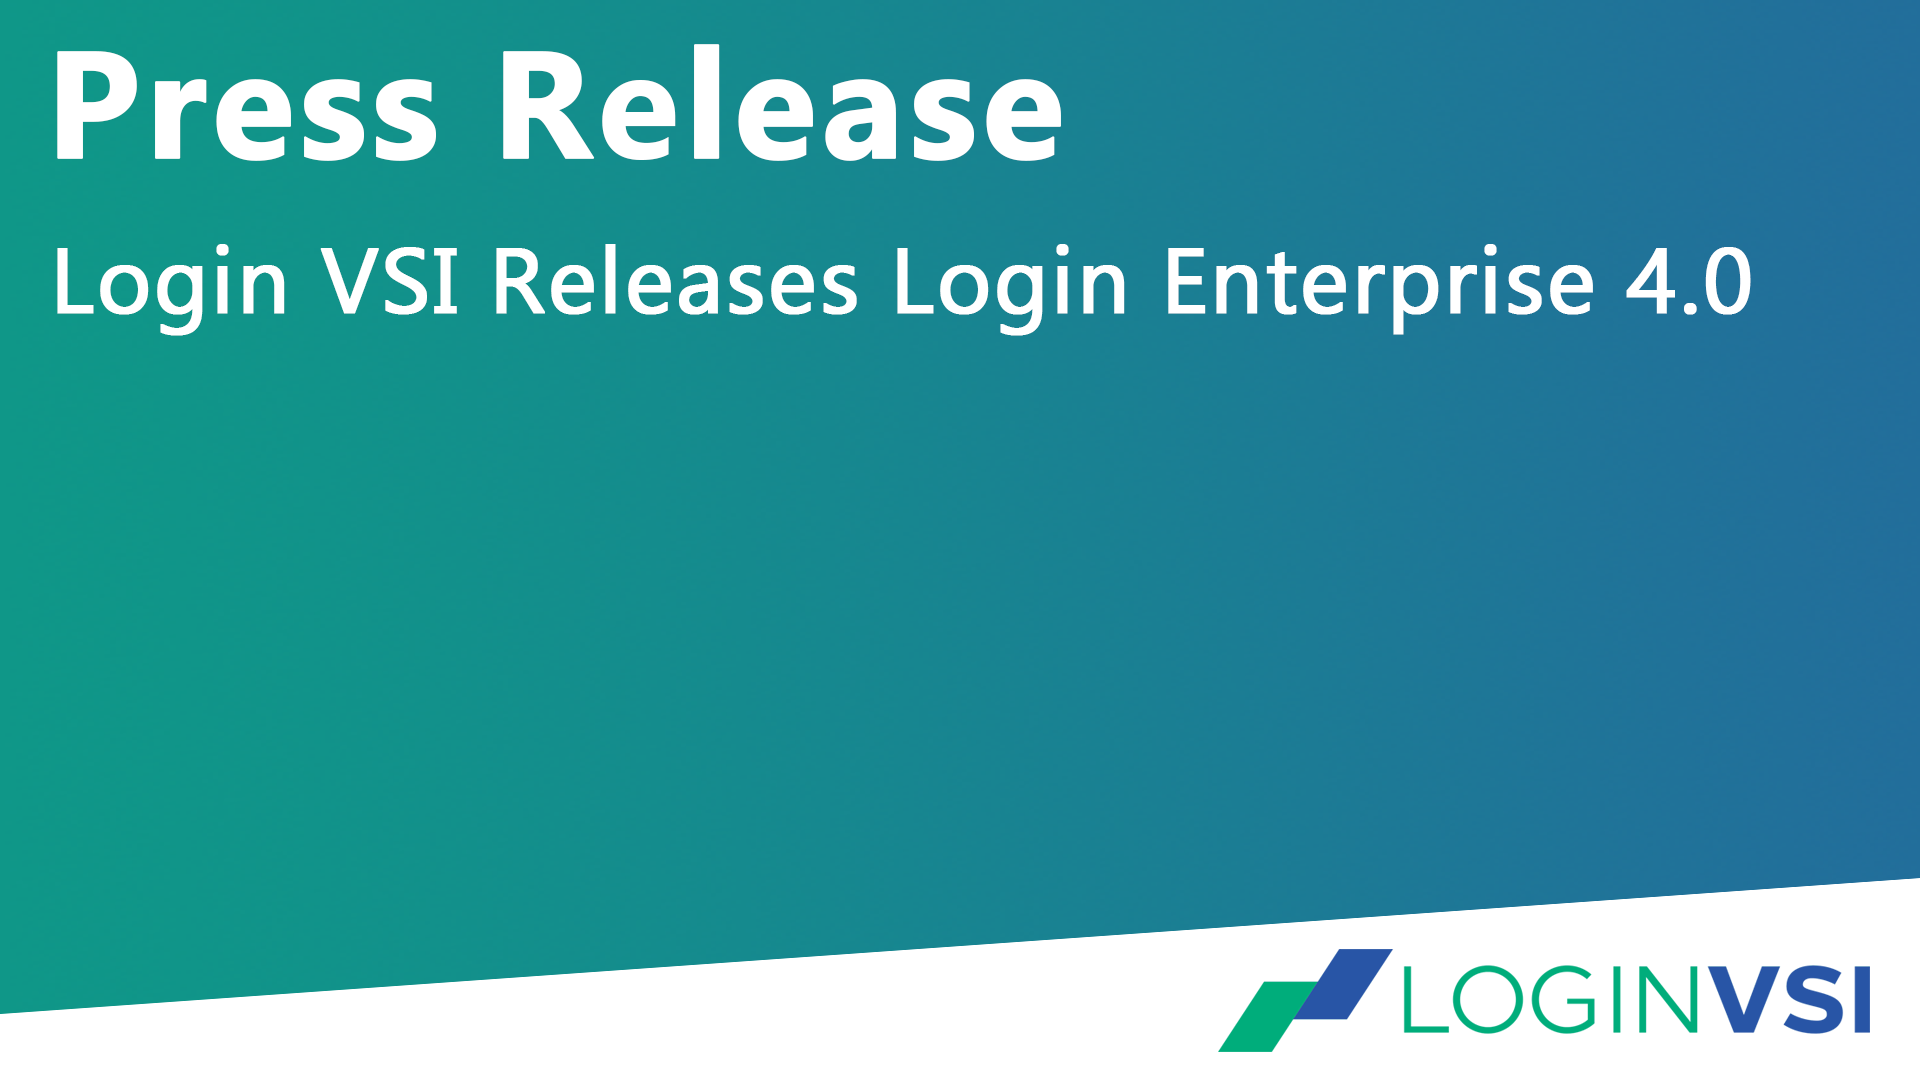 [Press Release] Login VSI Releases Login Enterprise 4.0